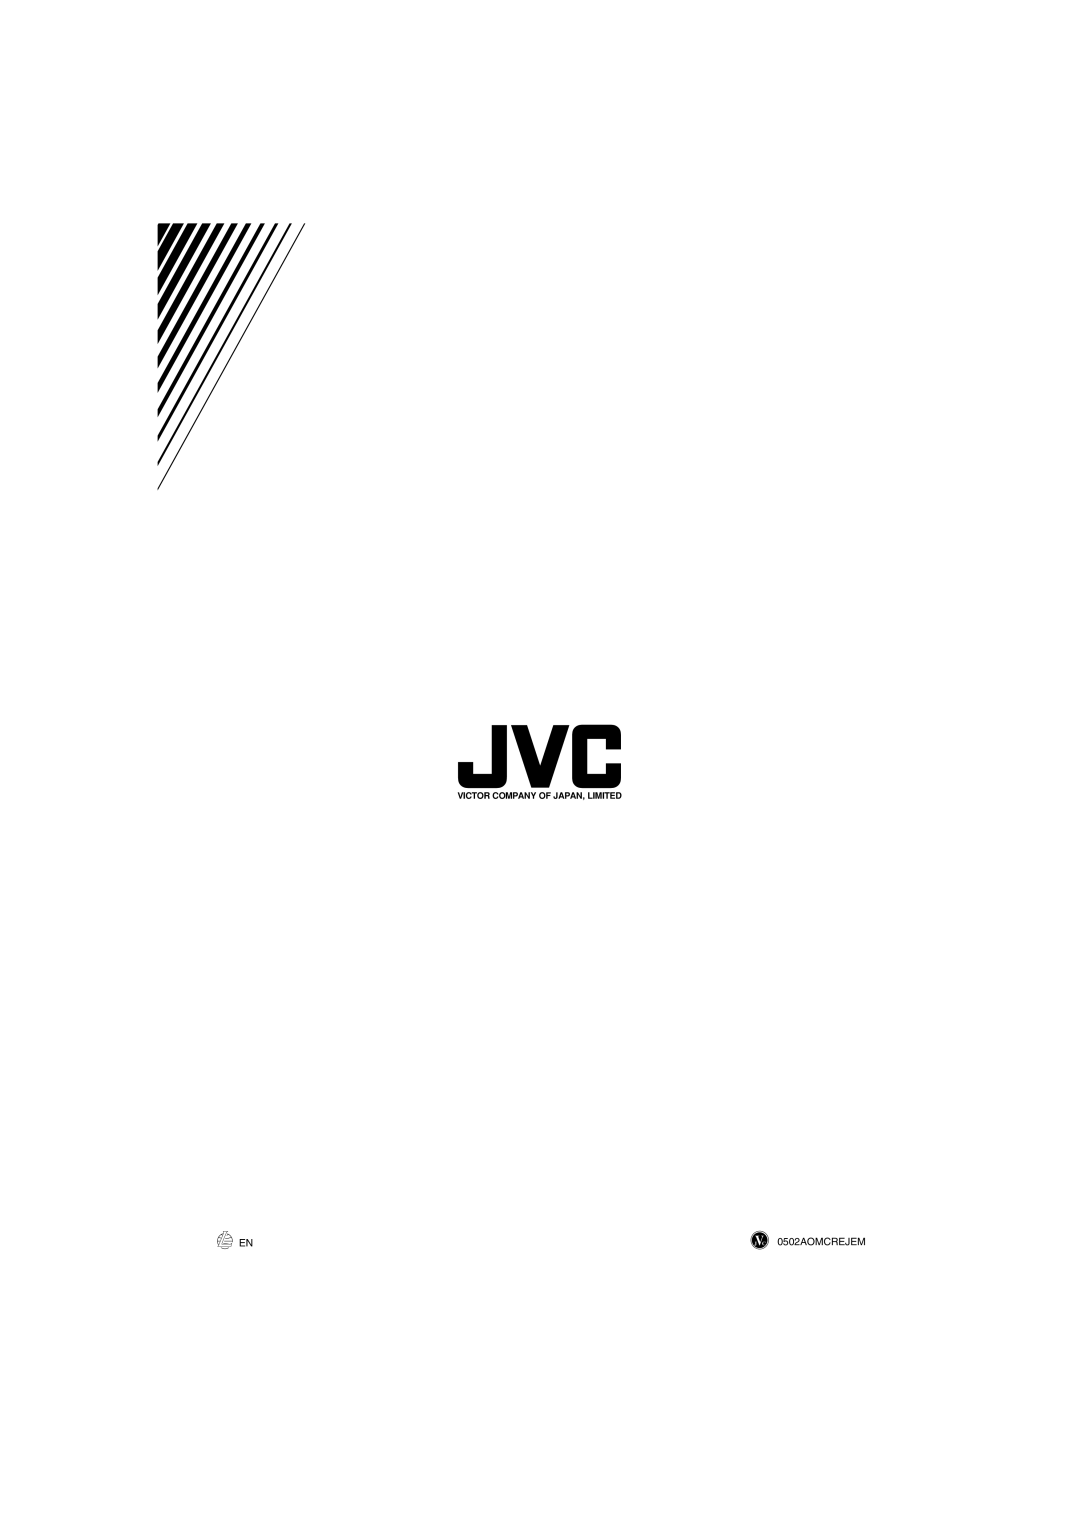 JVC XL-FZ700BK manual JVC 0502AOMCREJEM, Victor Company Of Japan, Limited 